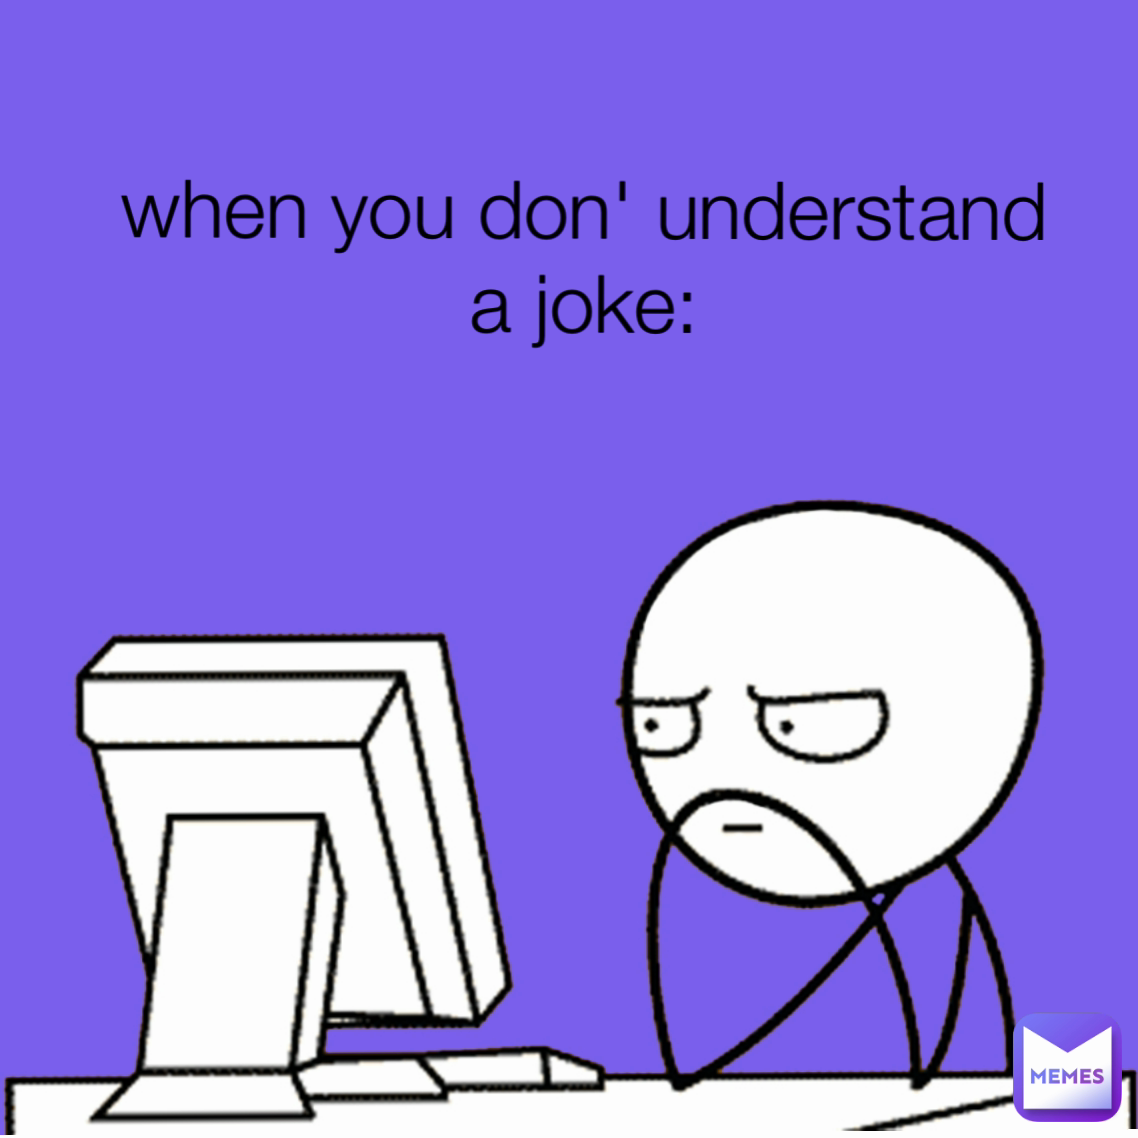 when you don' understand a joke: